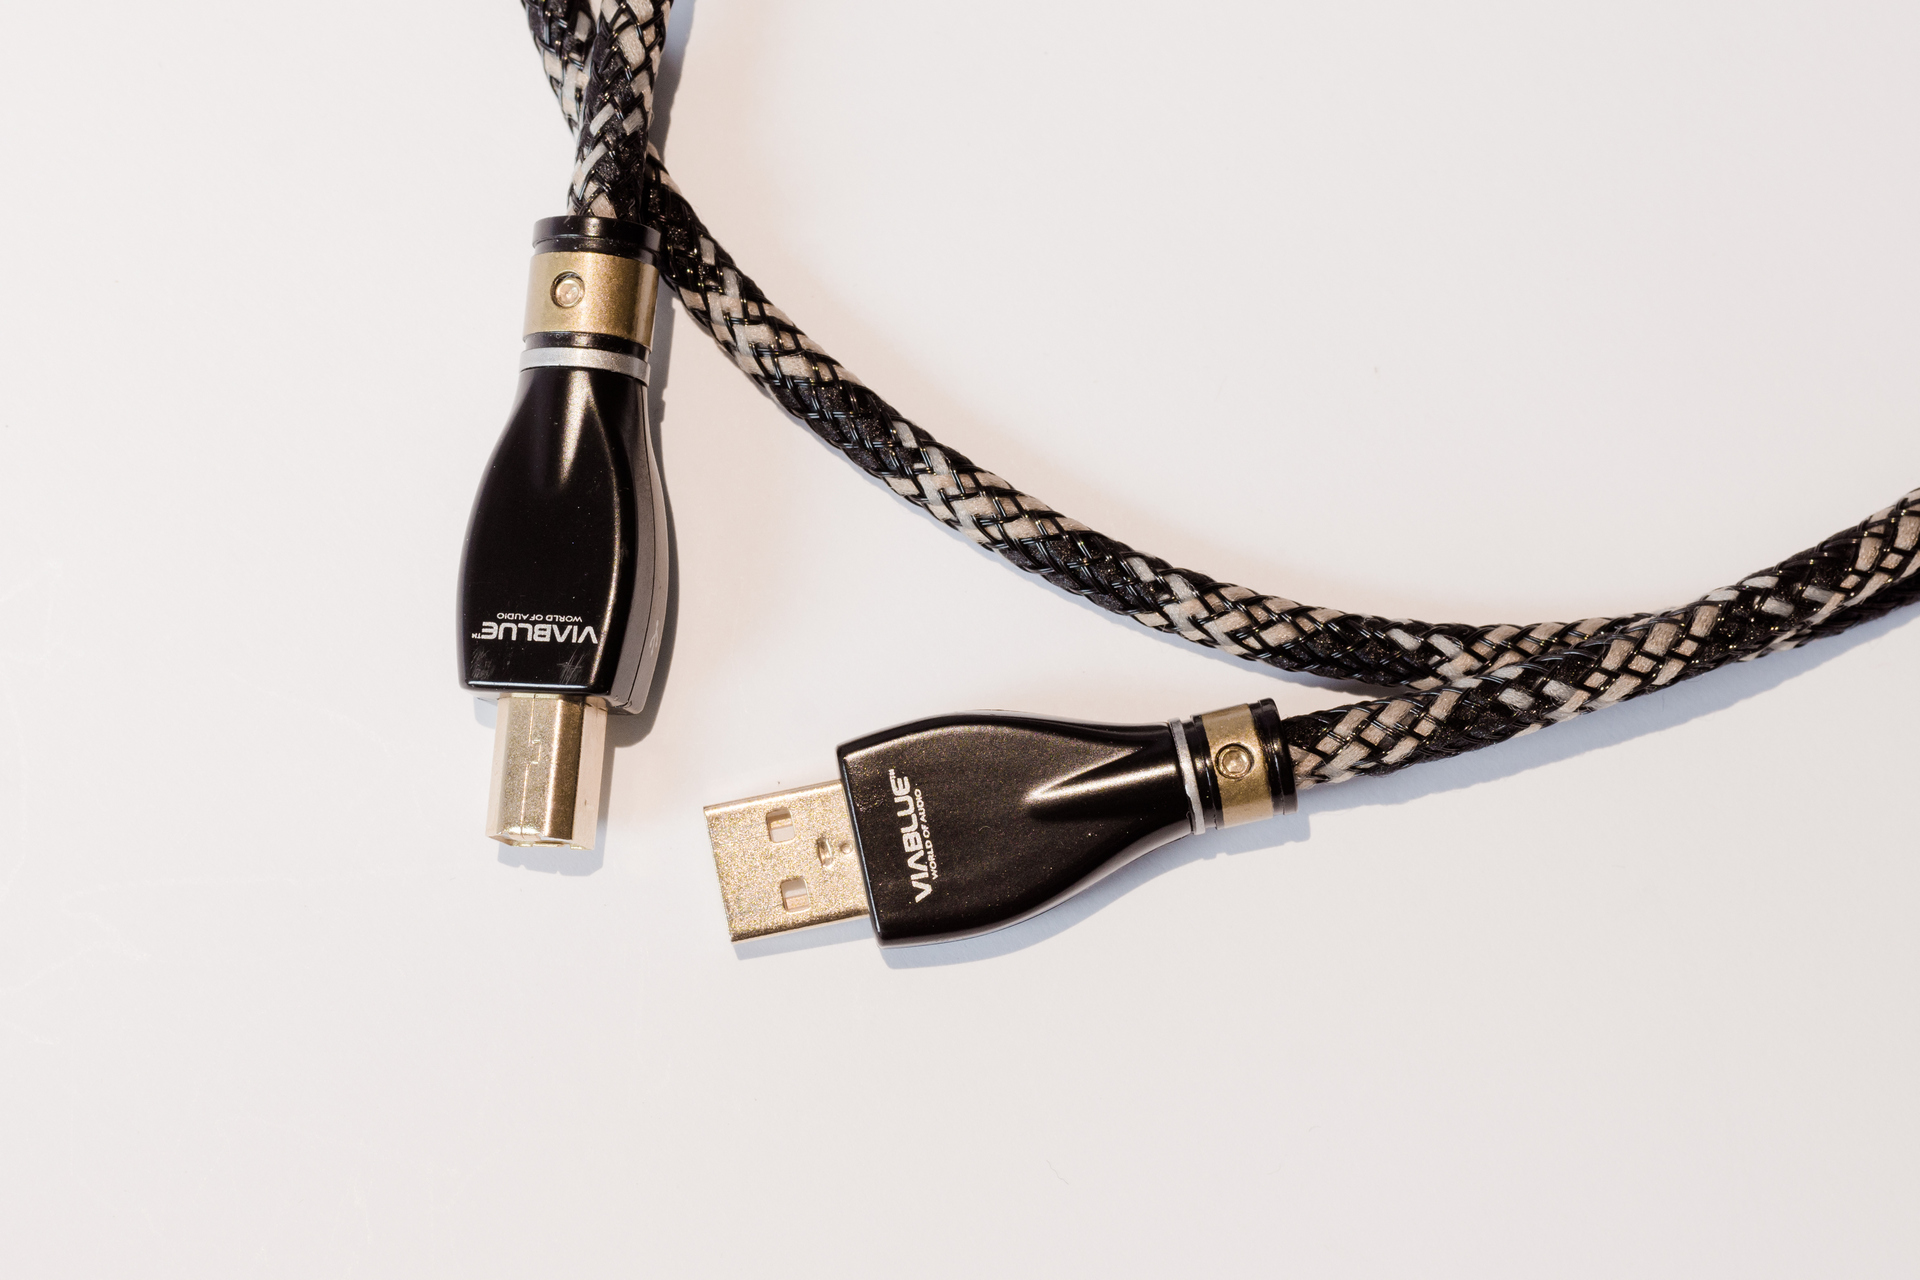 1,00m ViaBlue KR-2 SILVER USB-KABEL A/MINI-BLänge